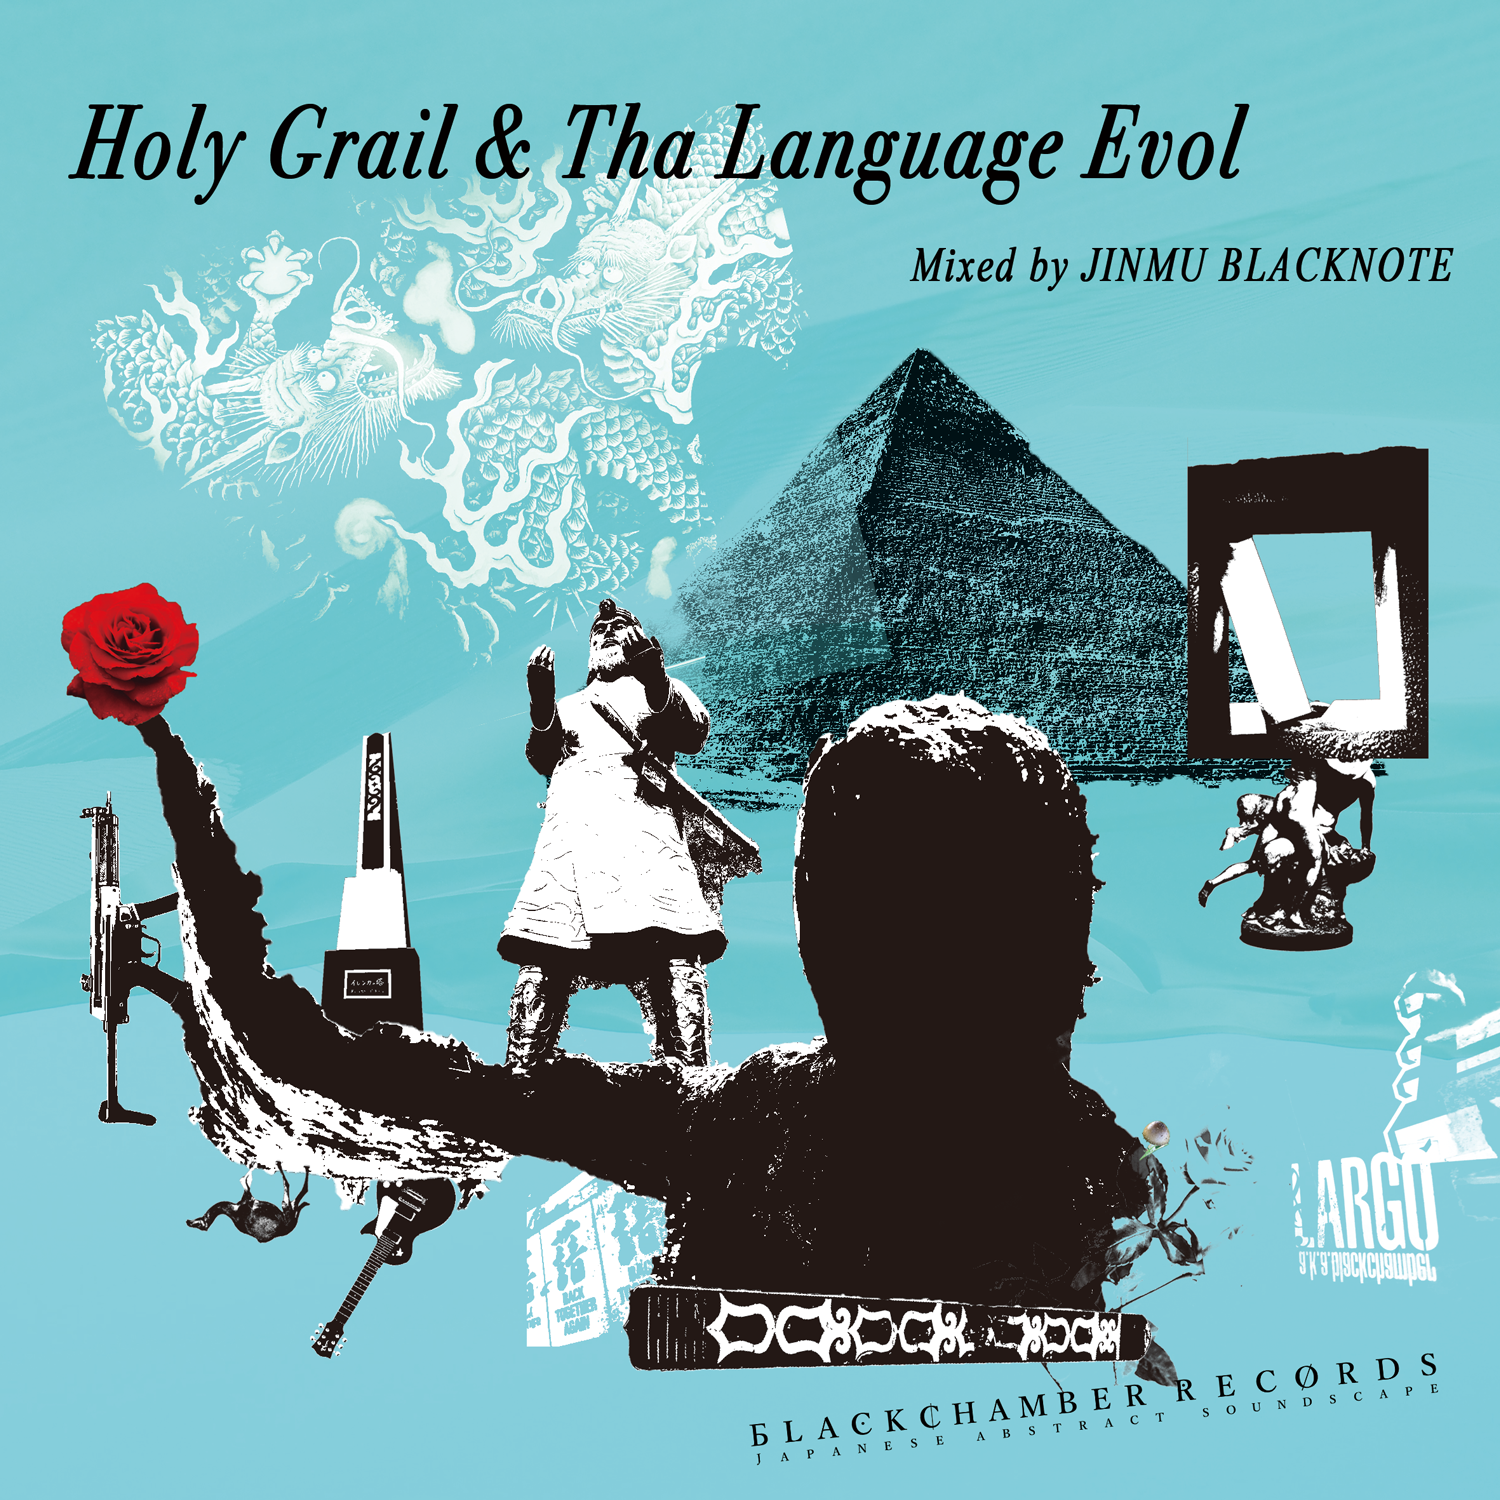 【Holy Grail & Tha Language Evol】 on MIXCLOUD